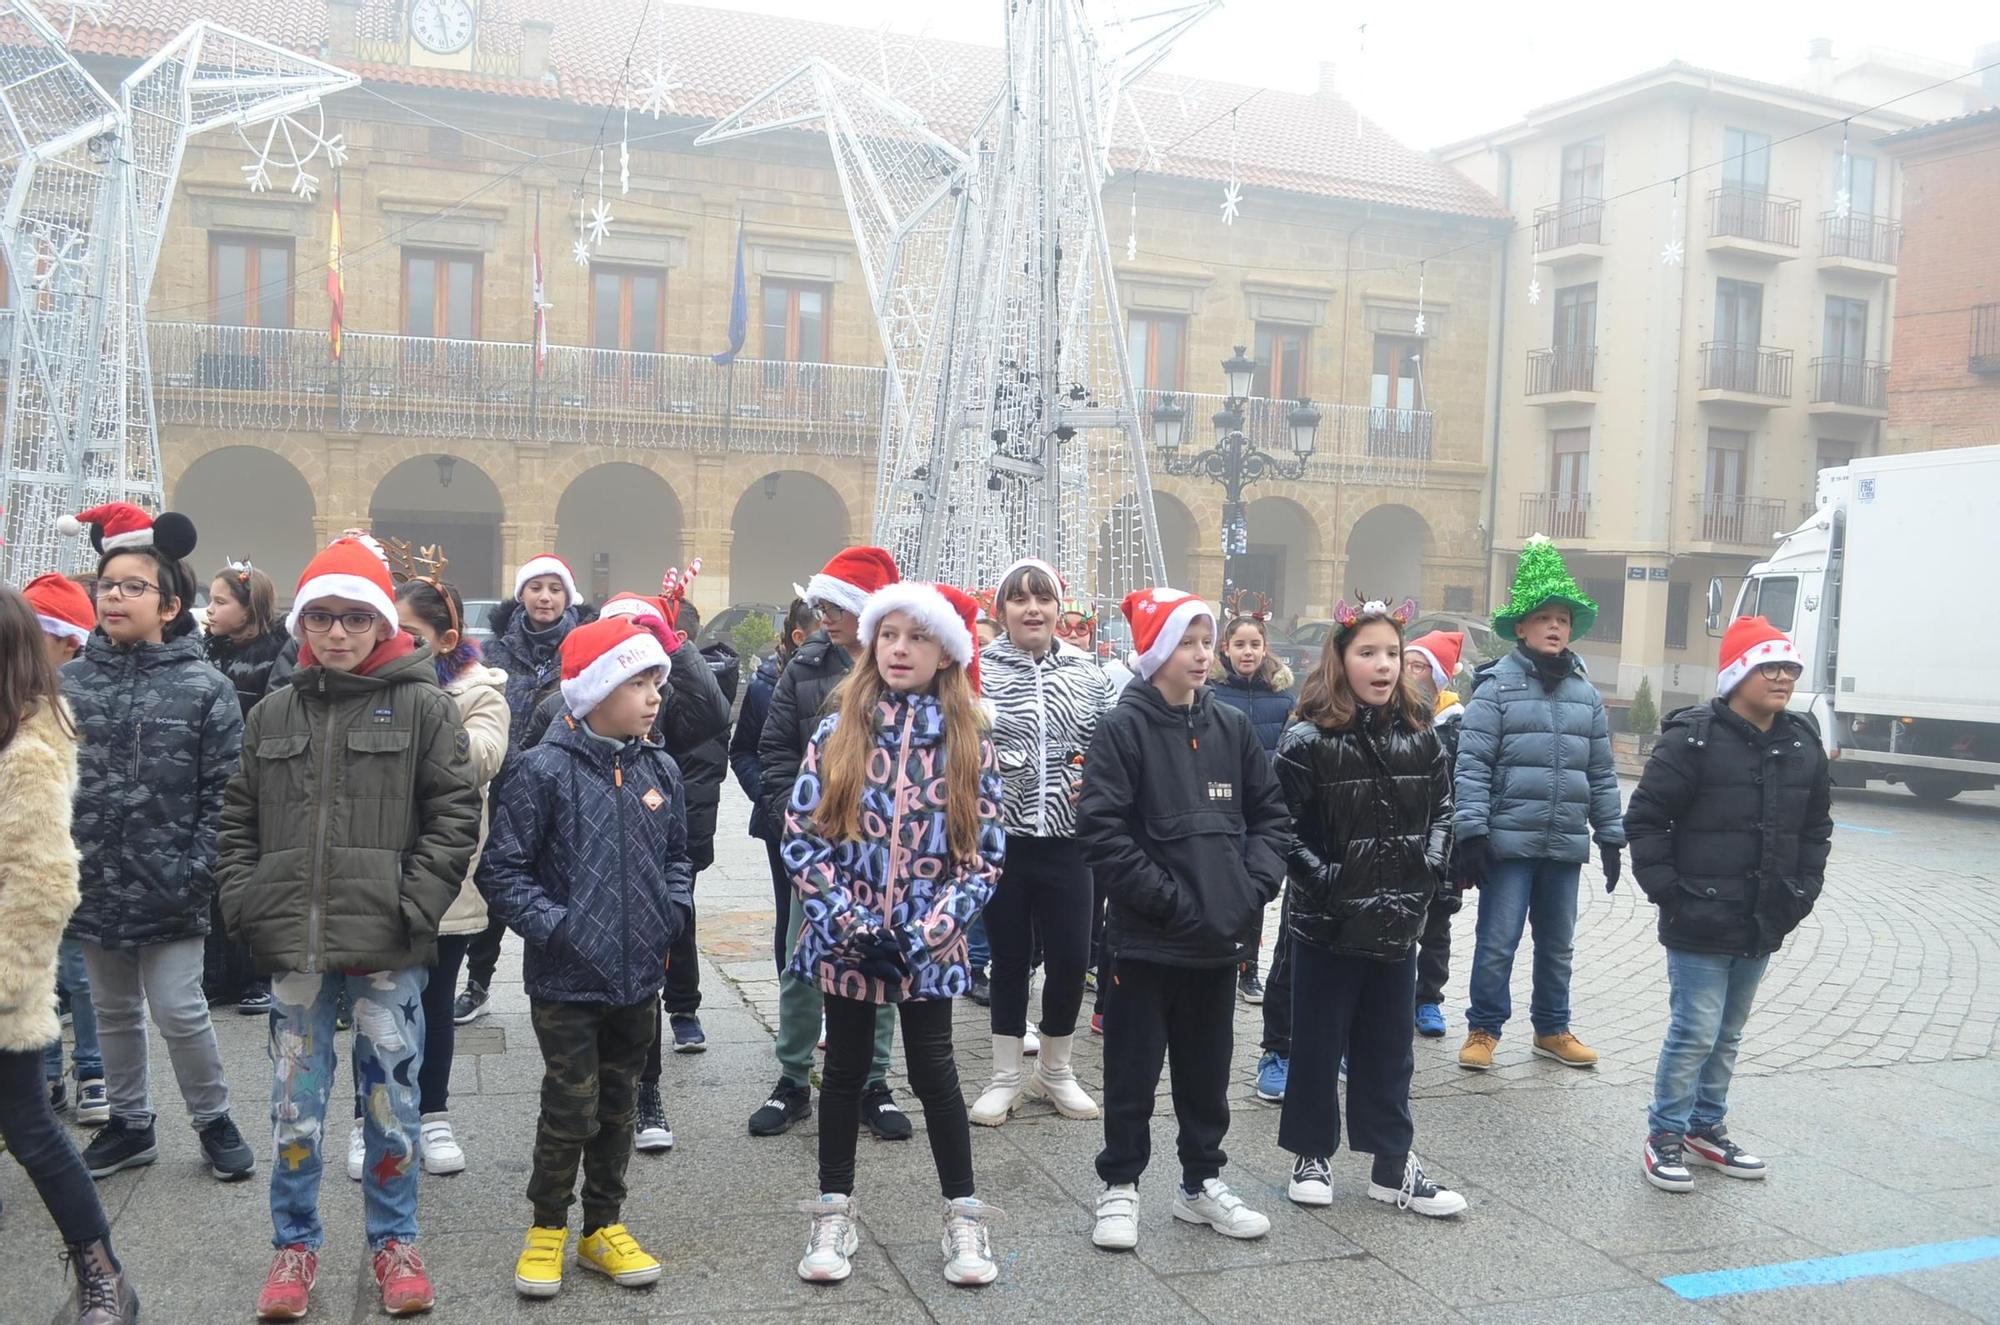 Navidad en Benavente: La Vega se divierte por Navidad